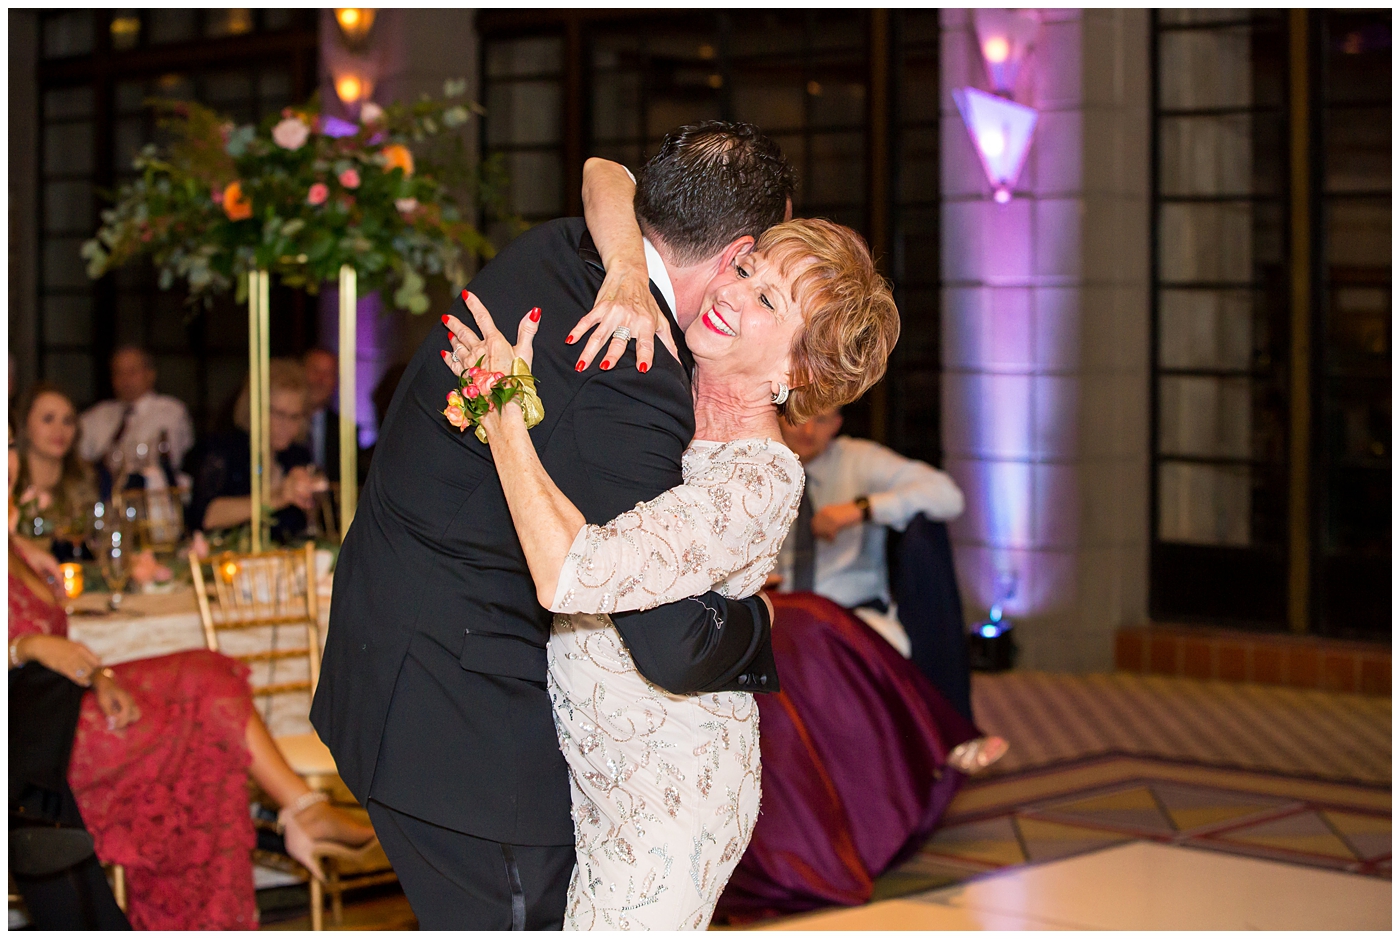 mother son dance in ballroom reception on wedding day